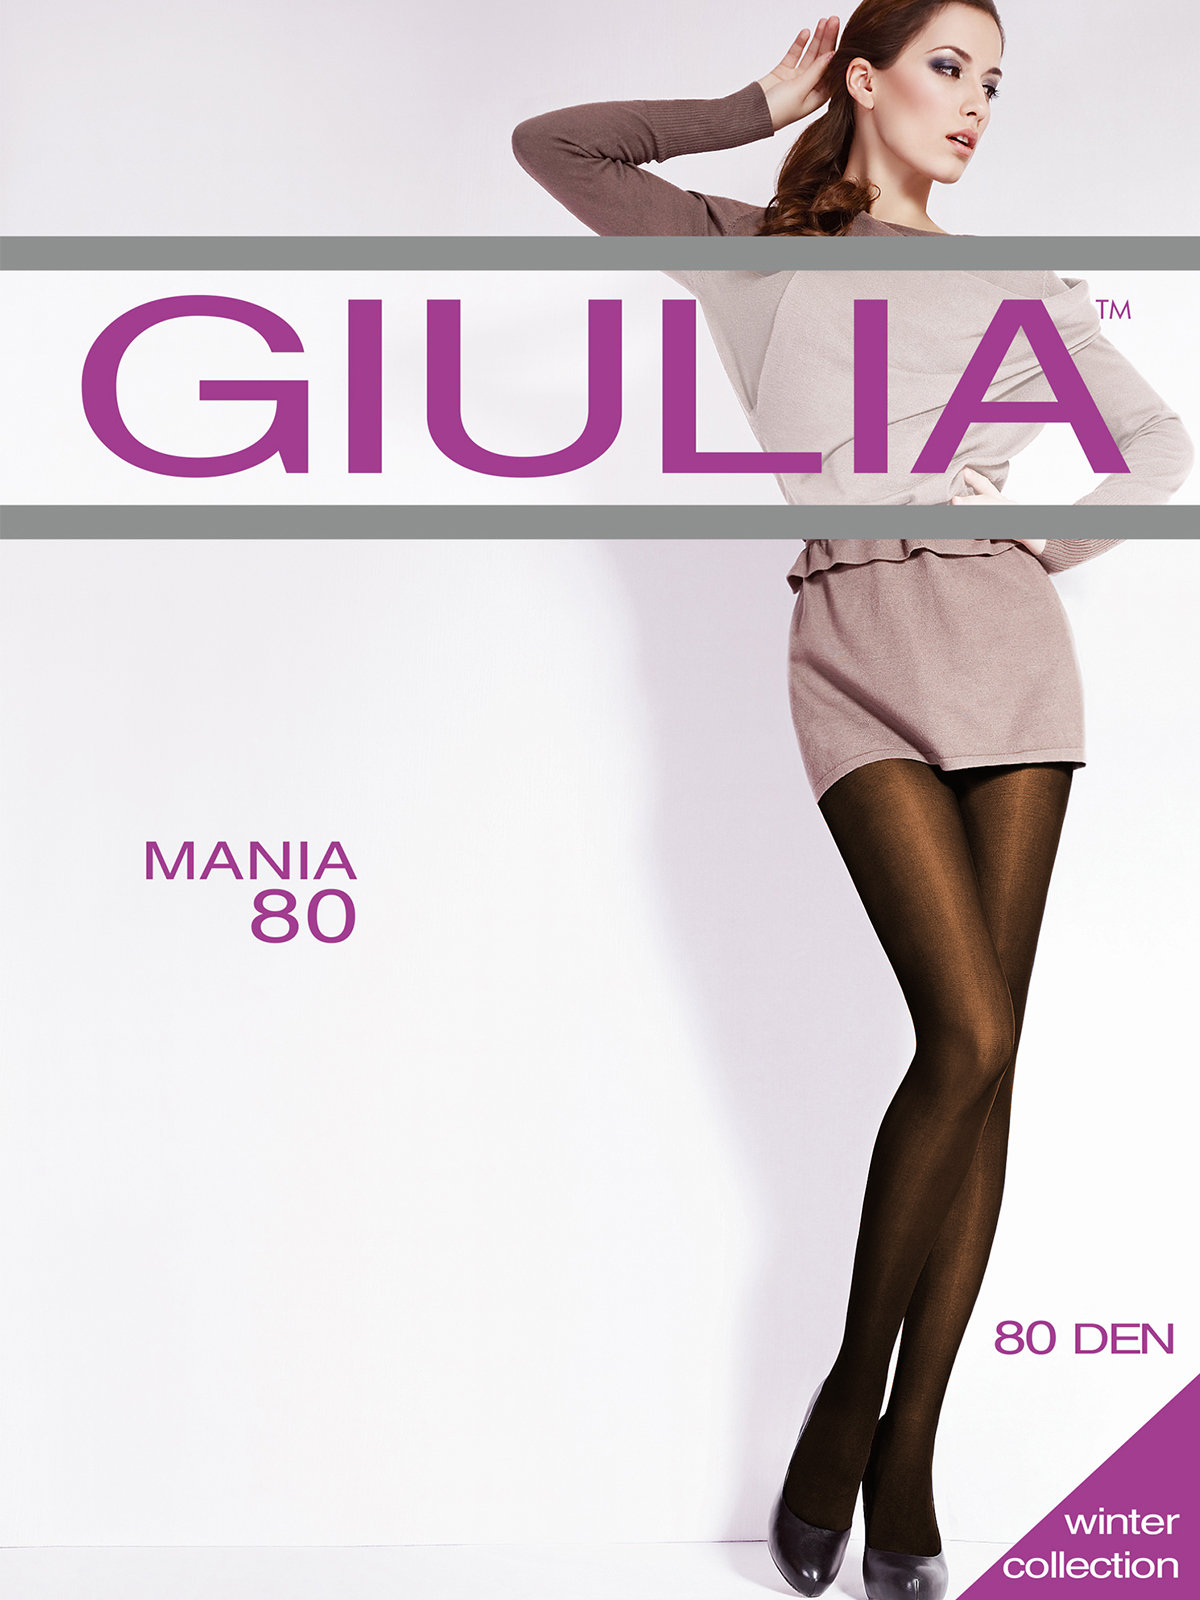 Колготки Giulia MANIA 80 коричневый